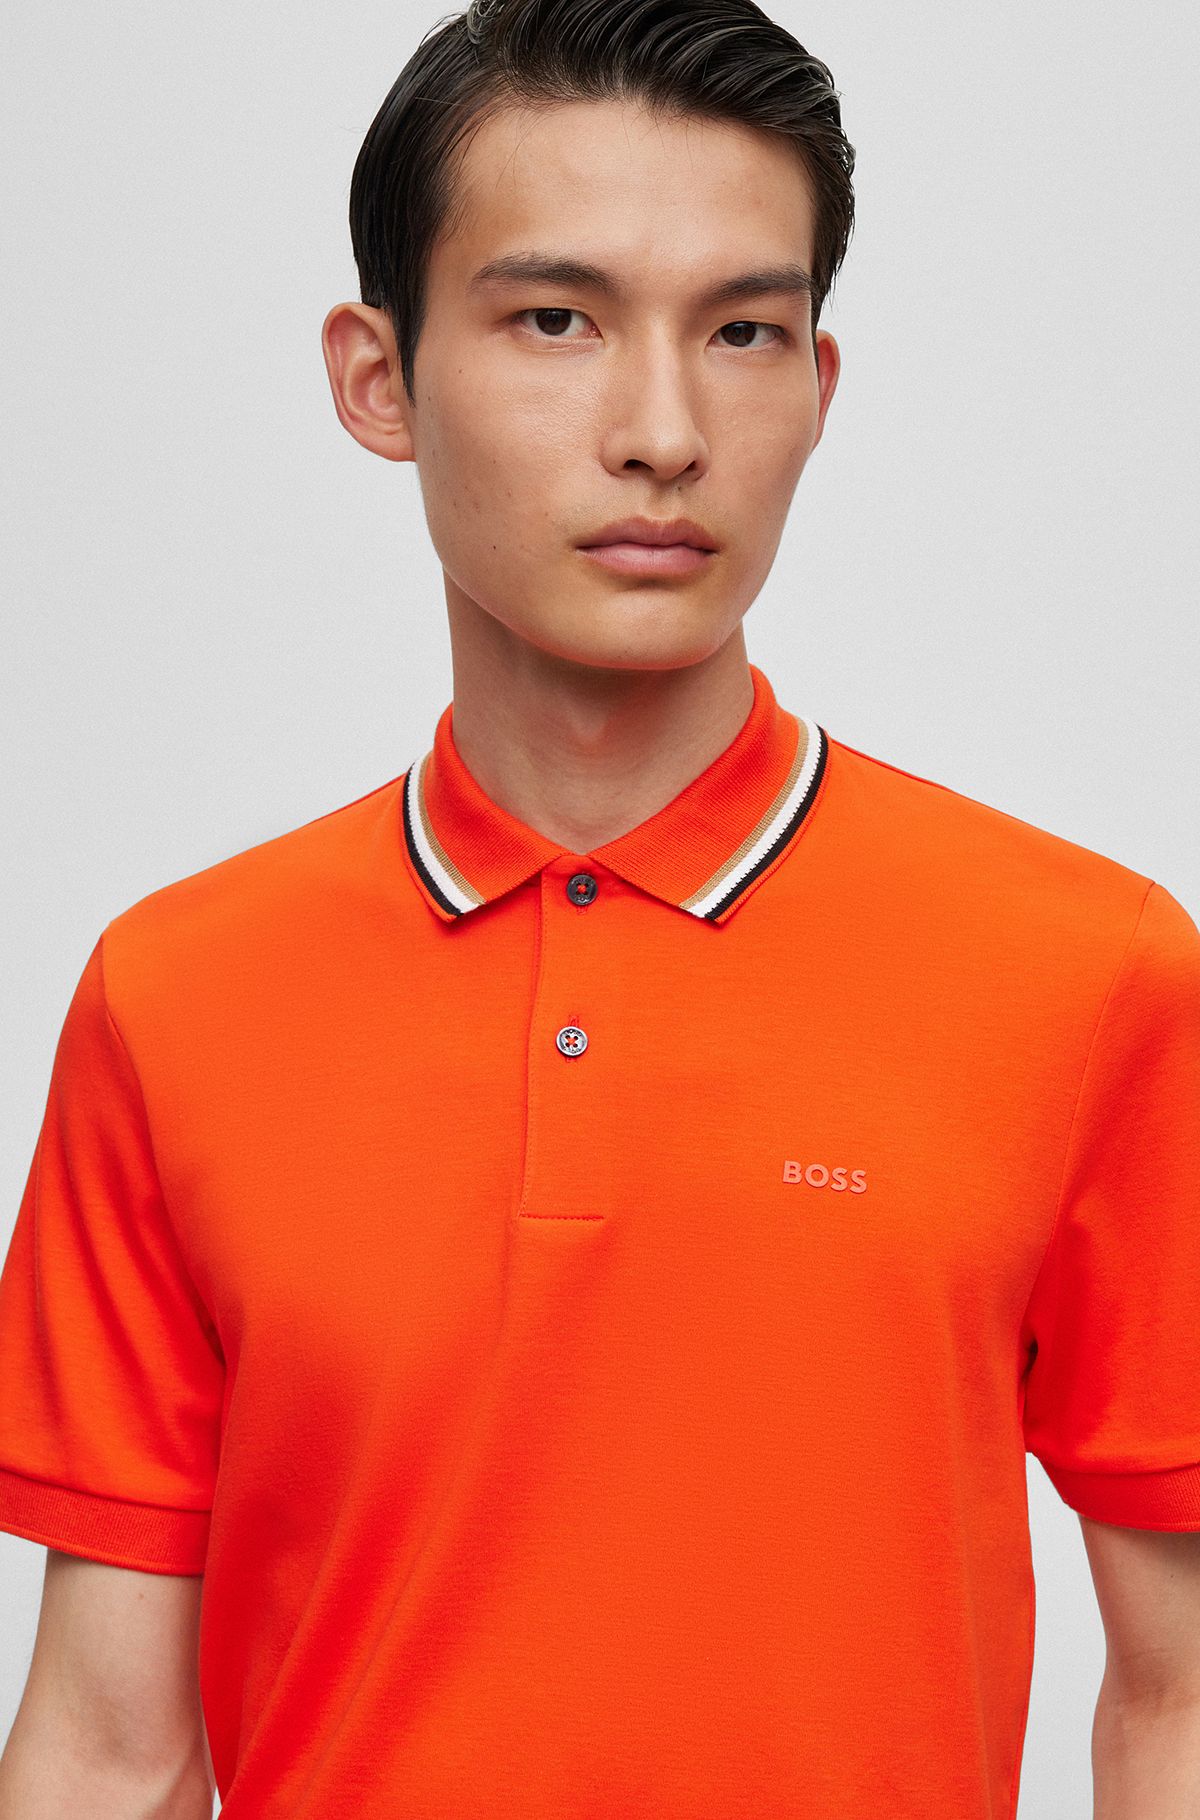 | in Polo BOSS Men Orange Shirts by HUGO